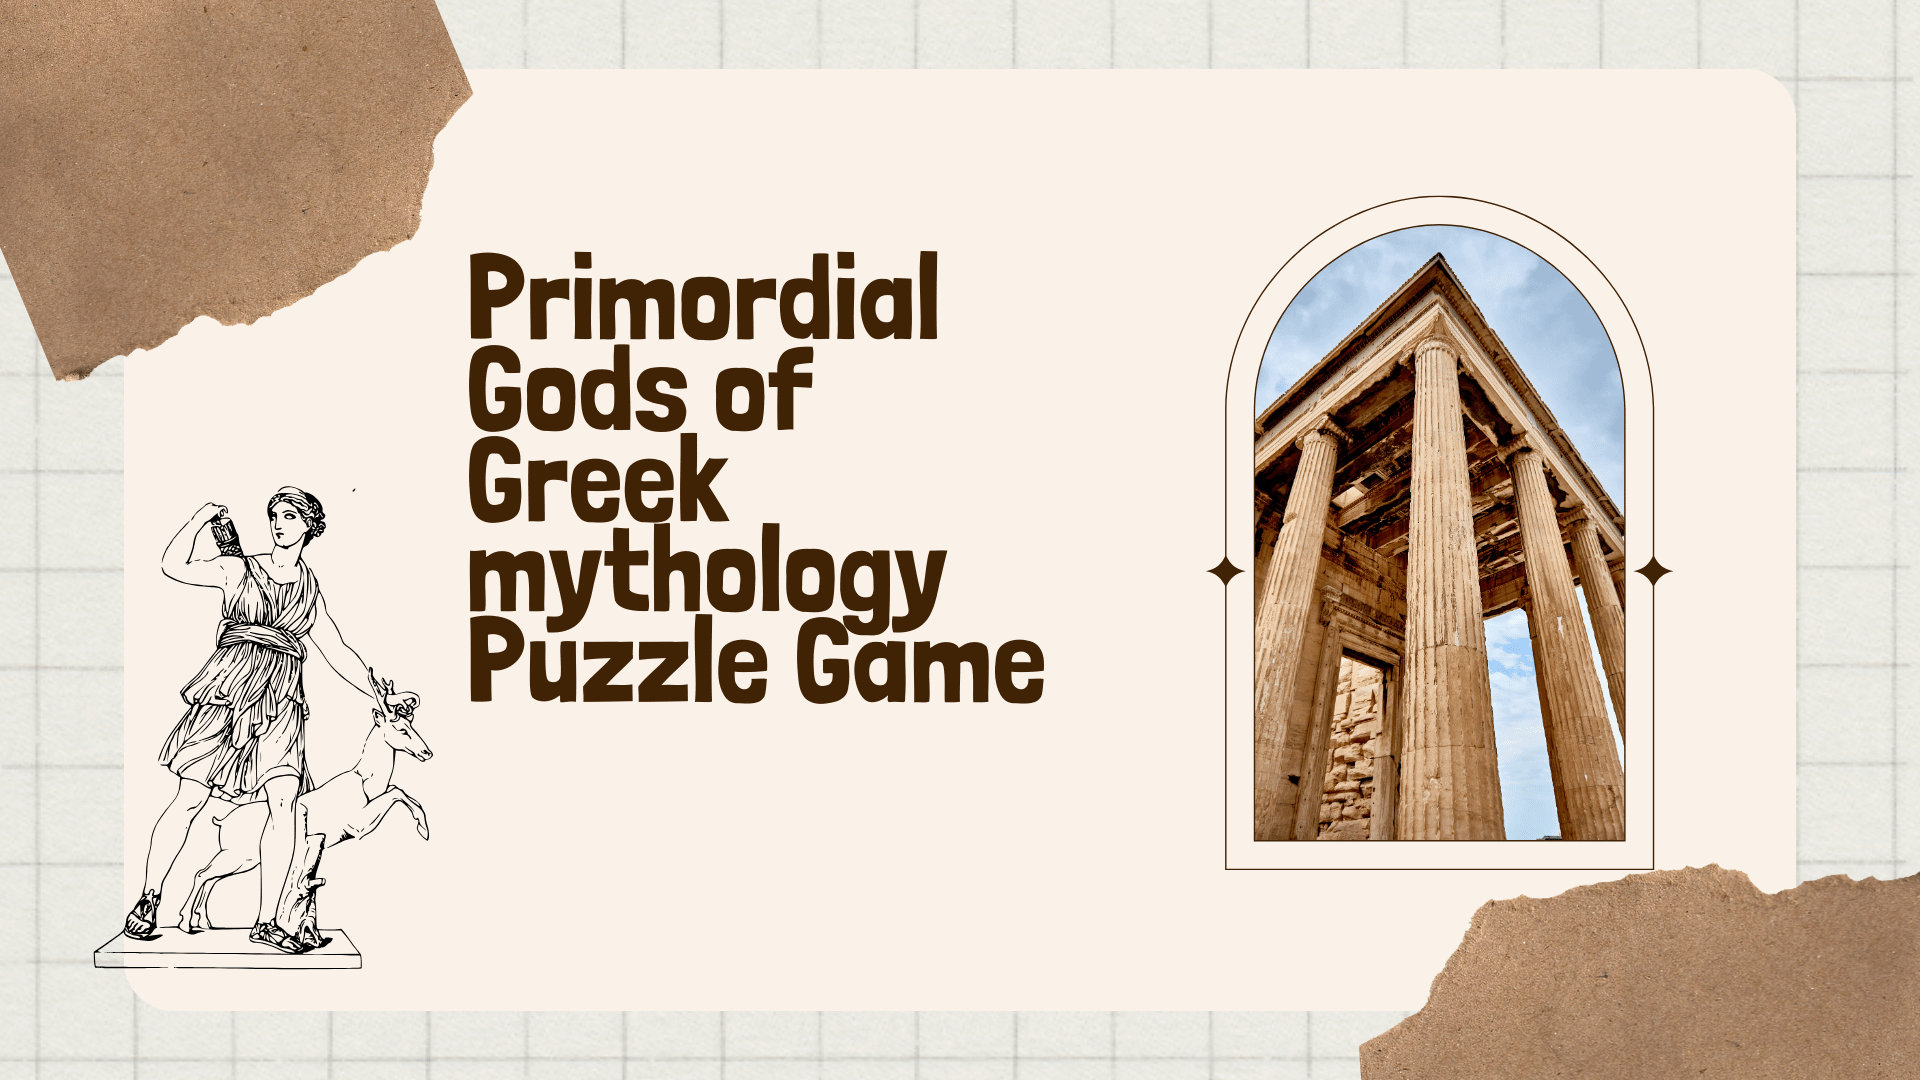 Primordial Gods of Greek mythology-Puzzle Game